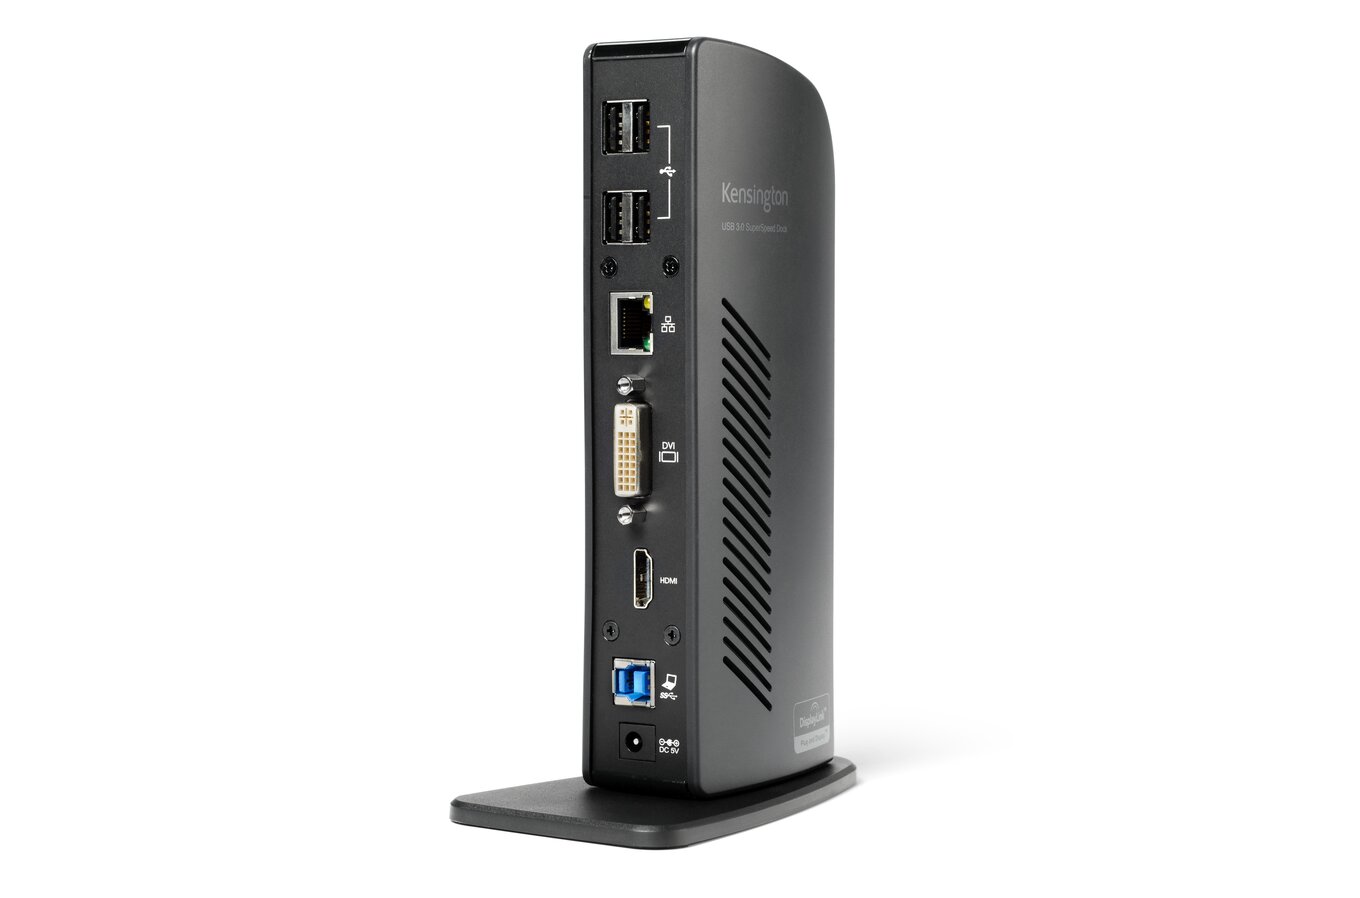 SD3500v 5Gbps USB 3.0 Dual 2K Station - HDMI/DVI-I/VGA - Windows | Universal Docking | Kensington